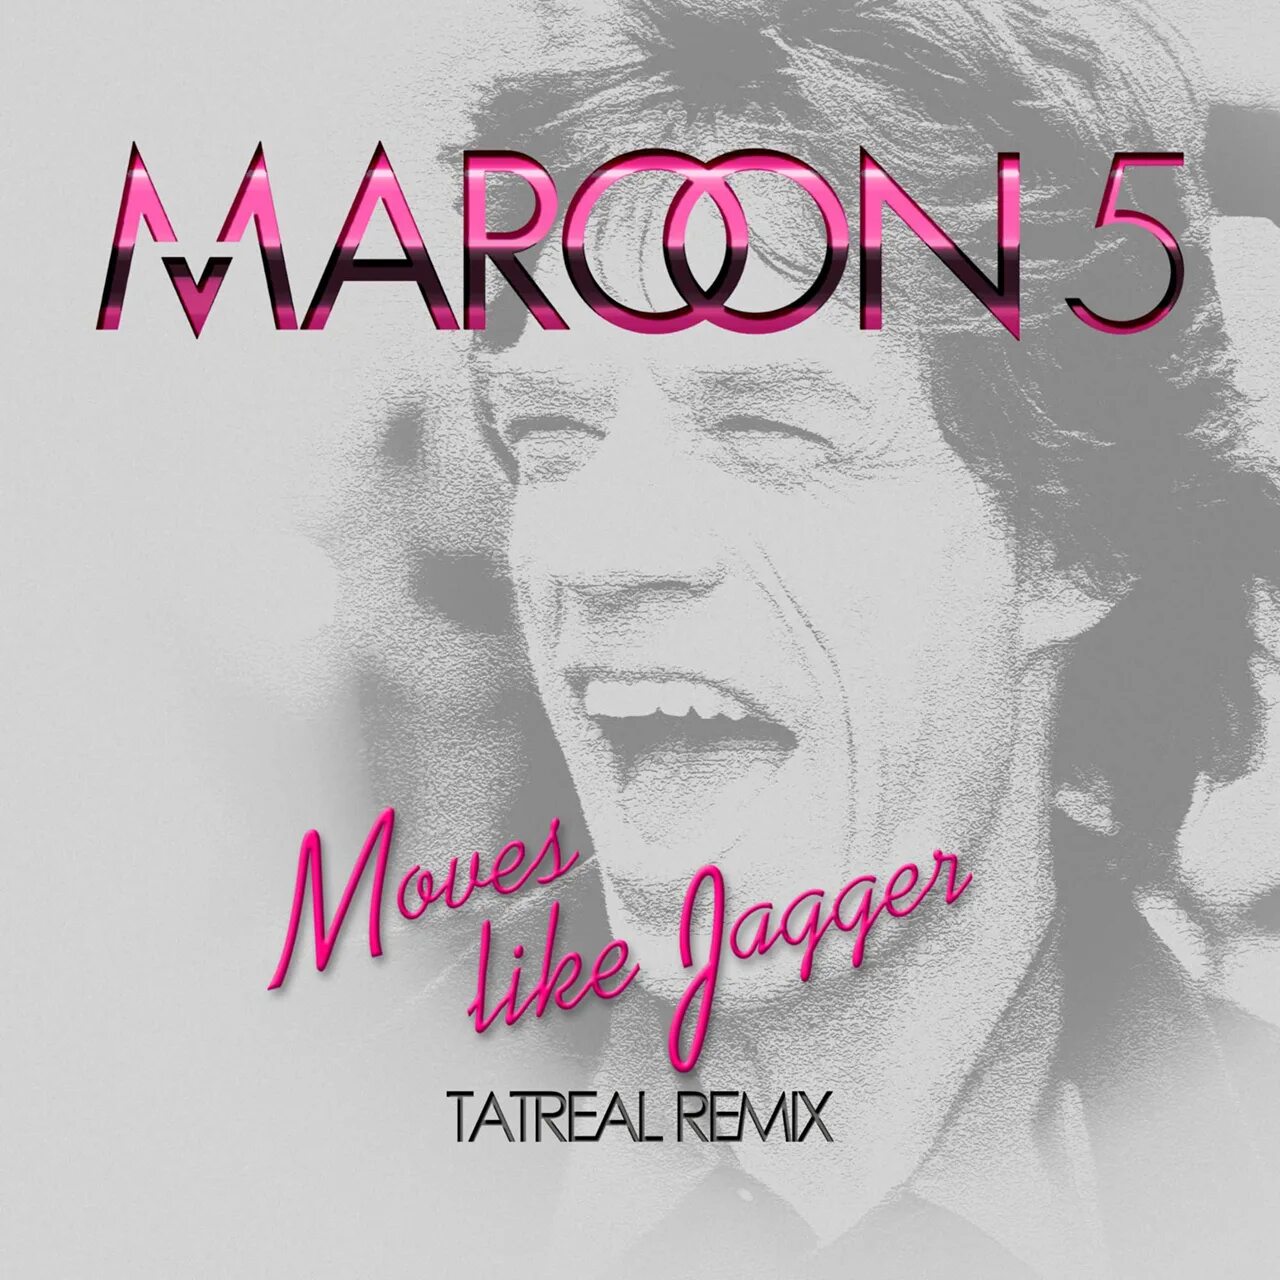 Maroon 5 Джаггер. Марон 5 мув лайк Джаггер. Moves like Jagger Maroon. Moves like Jaggar. Christina aguilera maroon 5 moves like jagger